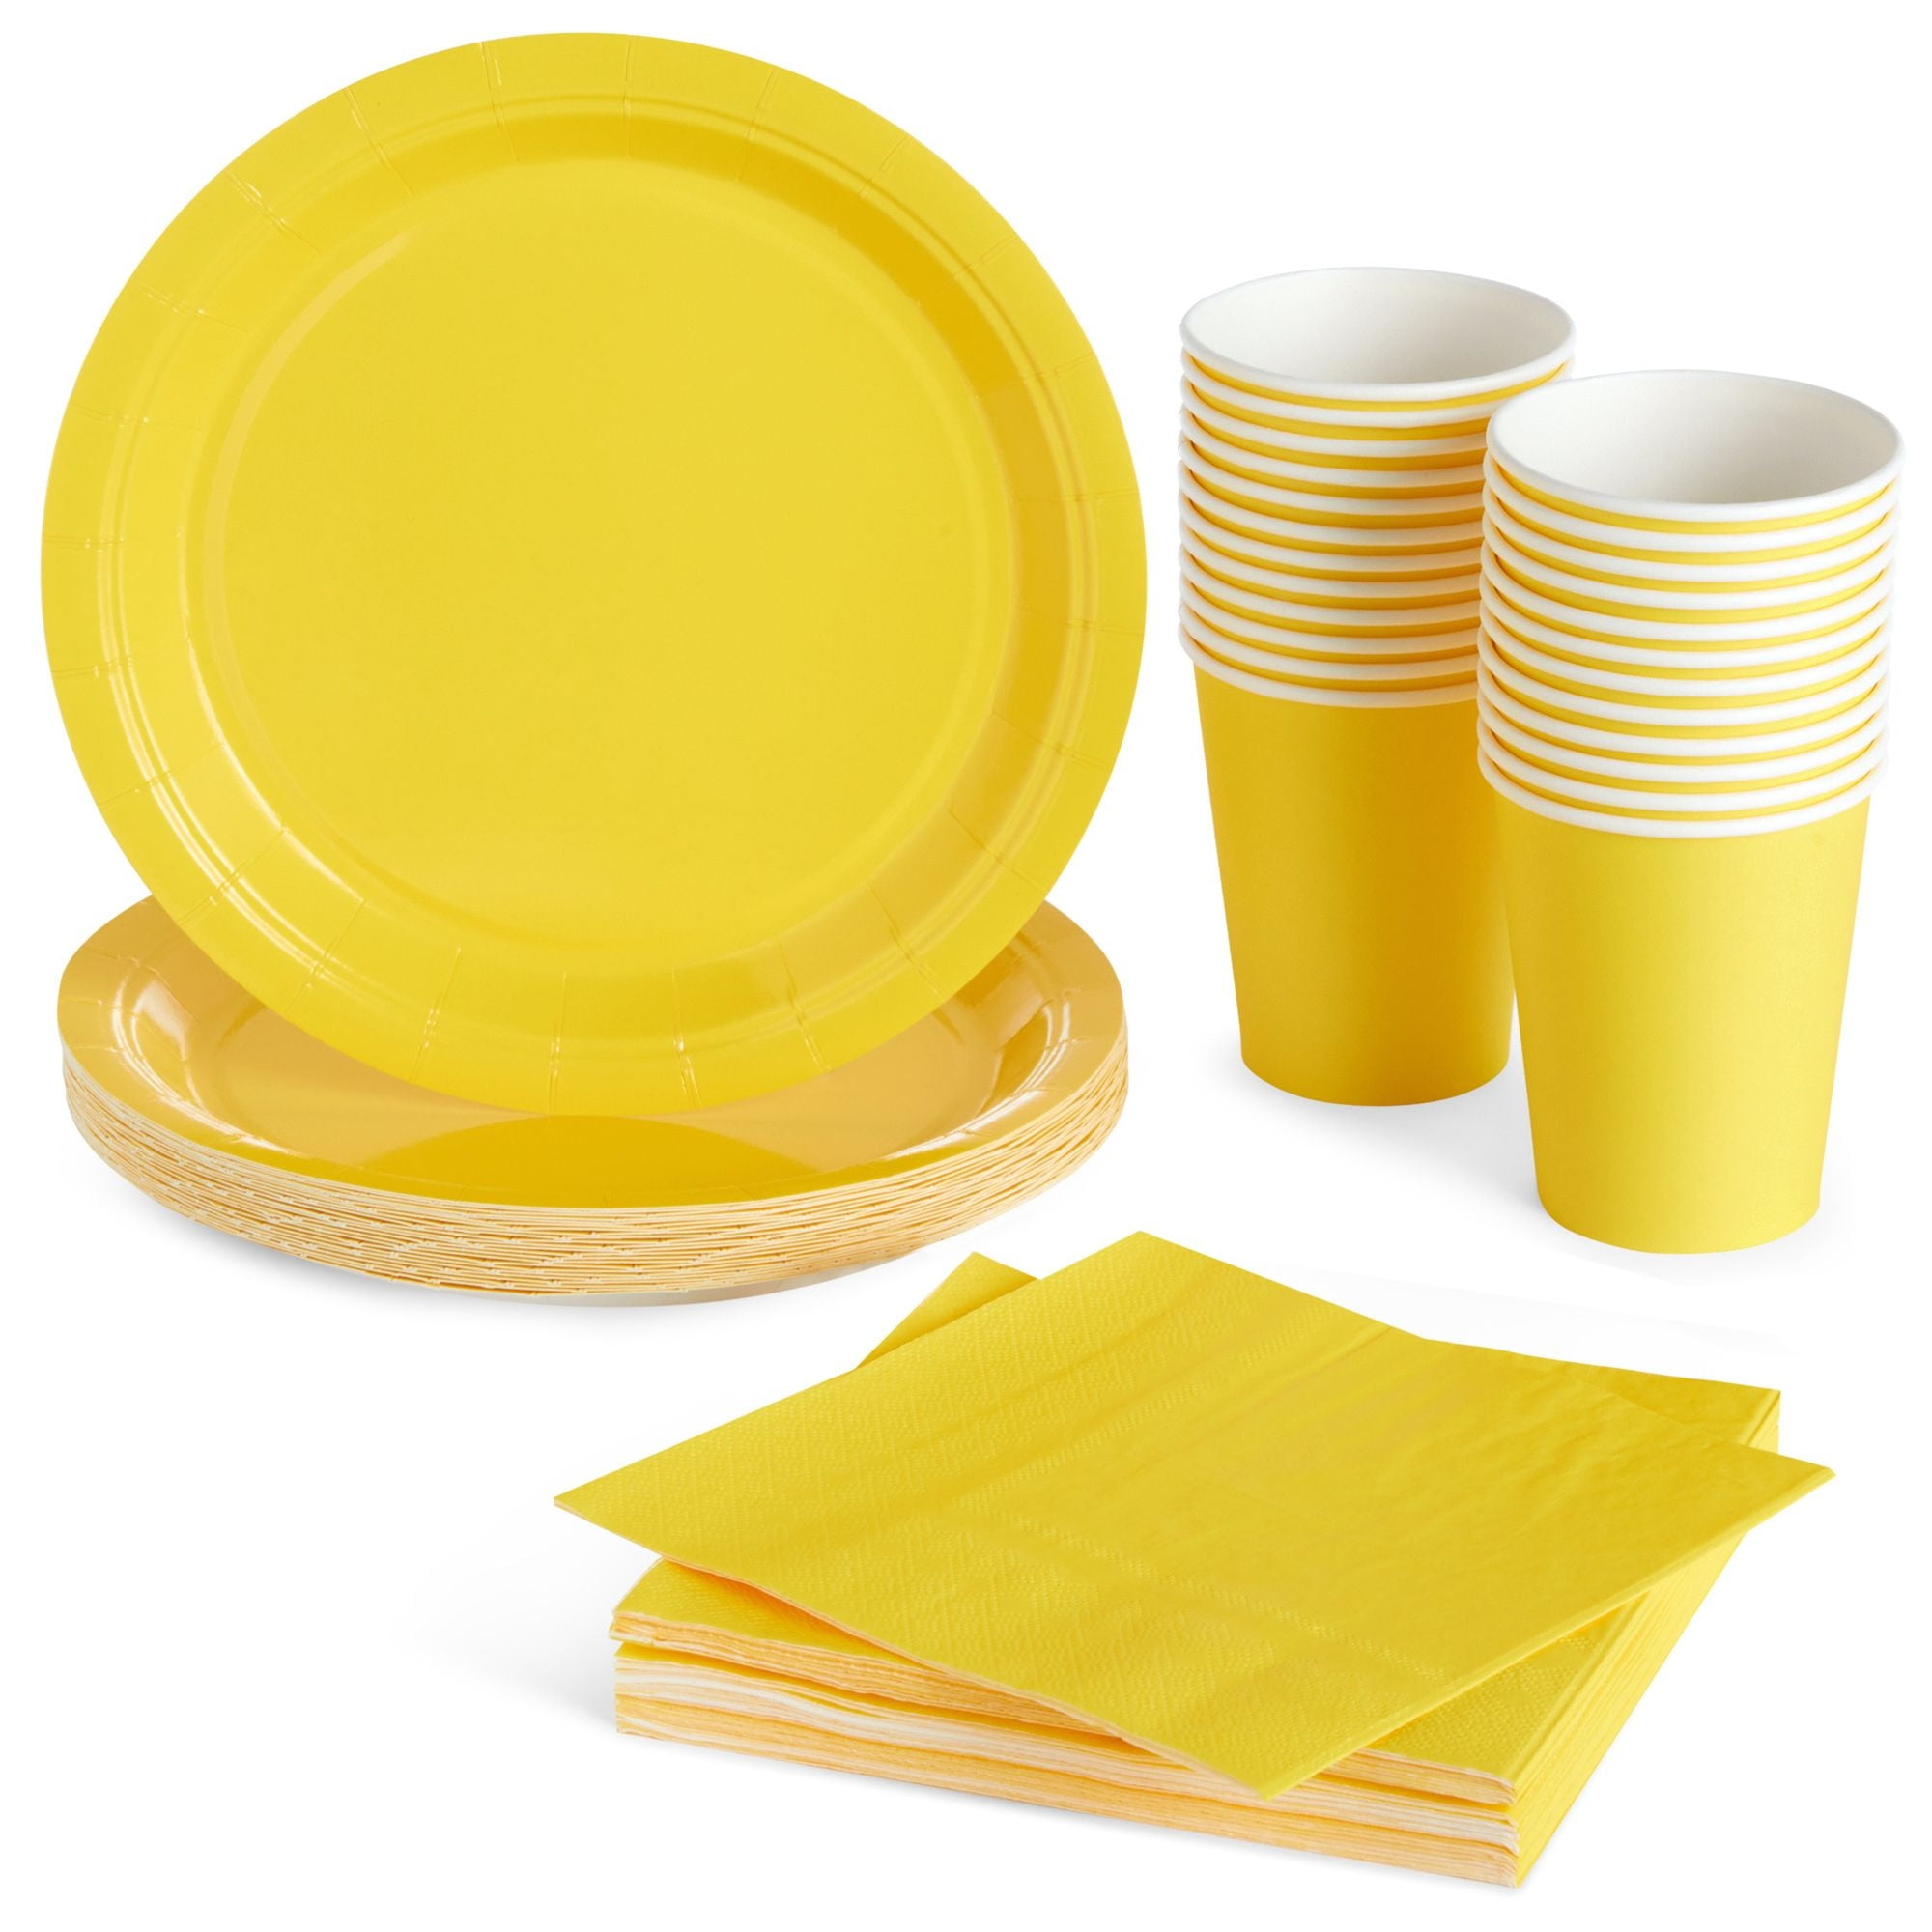 Serves 24 Orange Party Supplies, Disposable Paper Plates, Cups